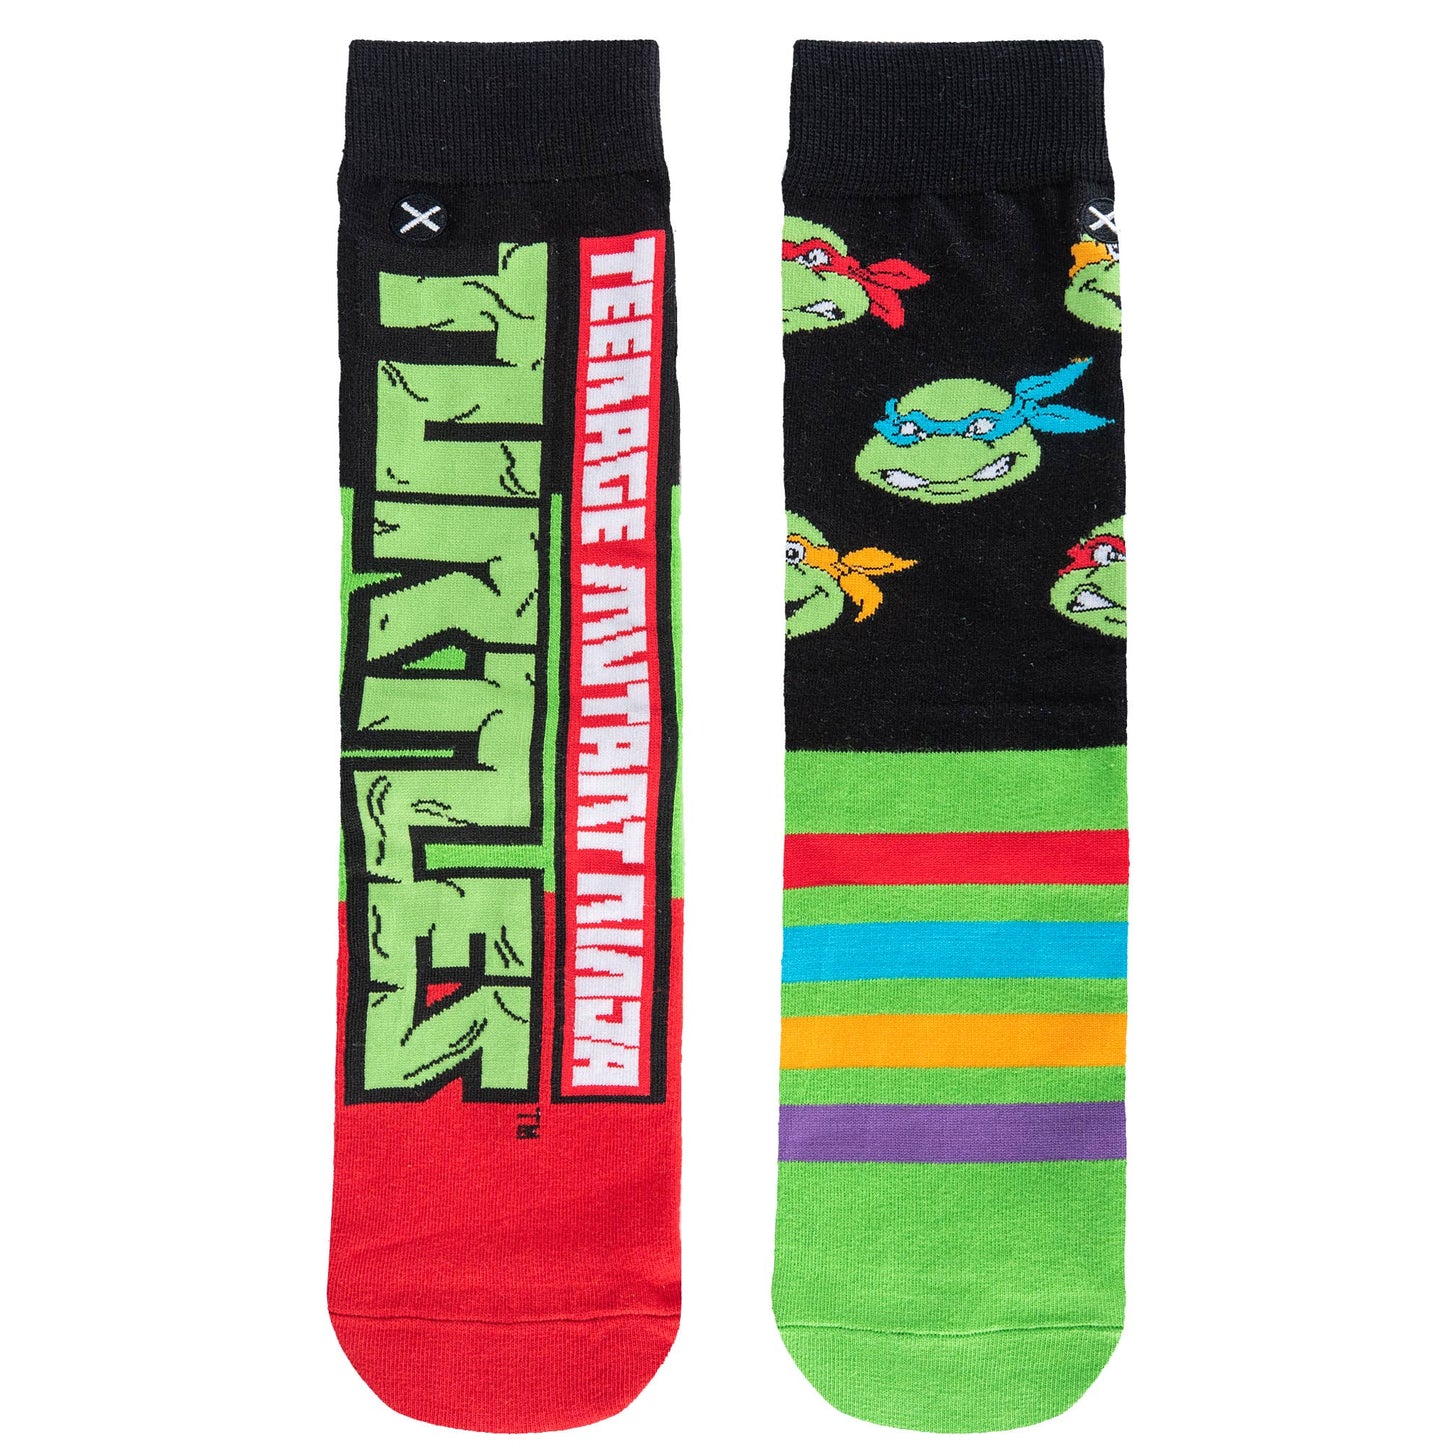 Socks - The Turtles Knit